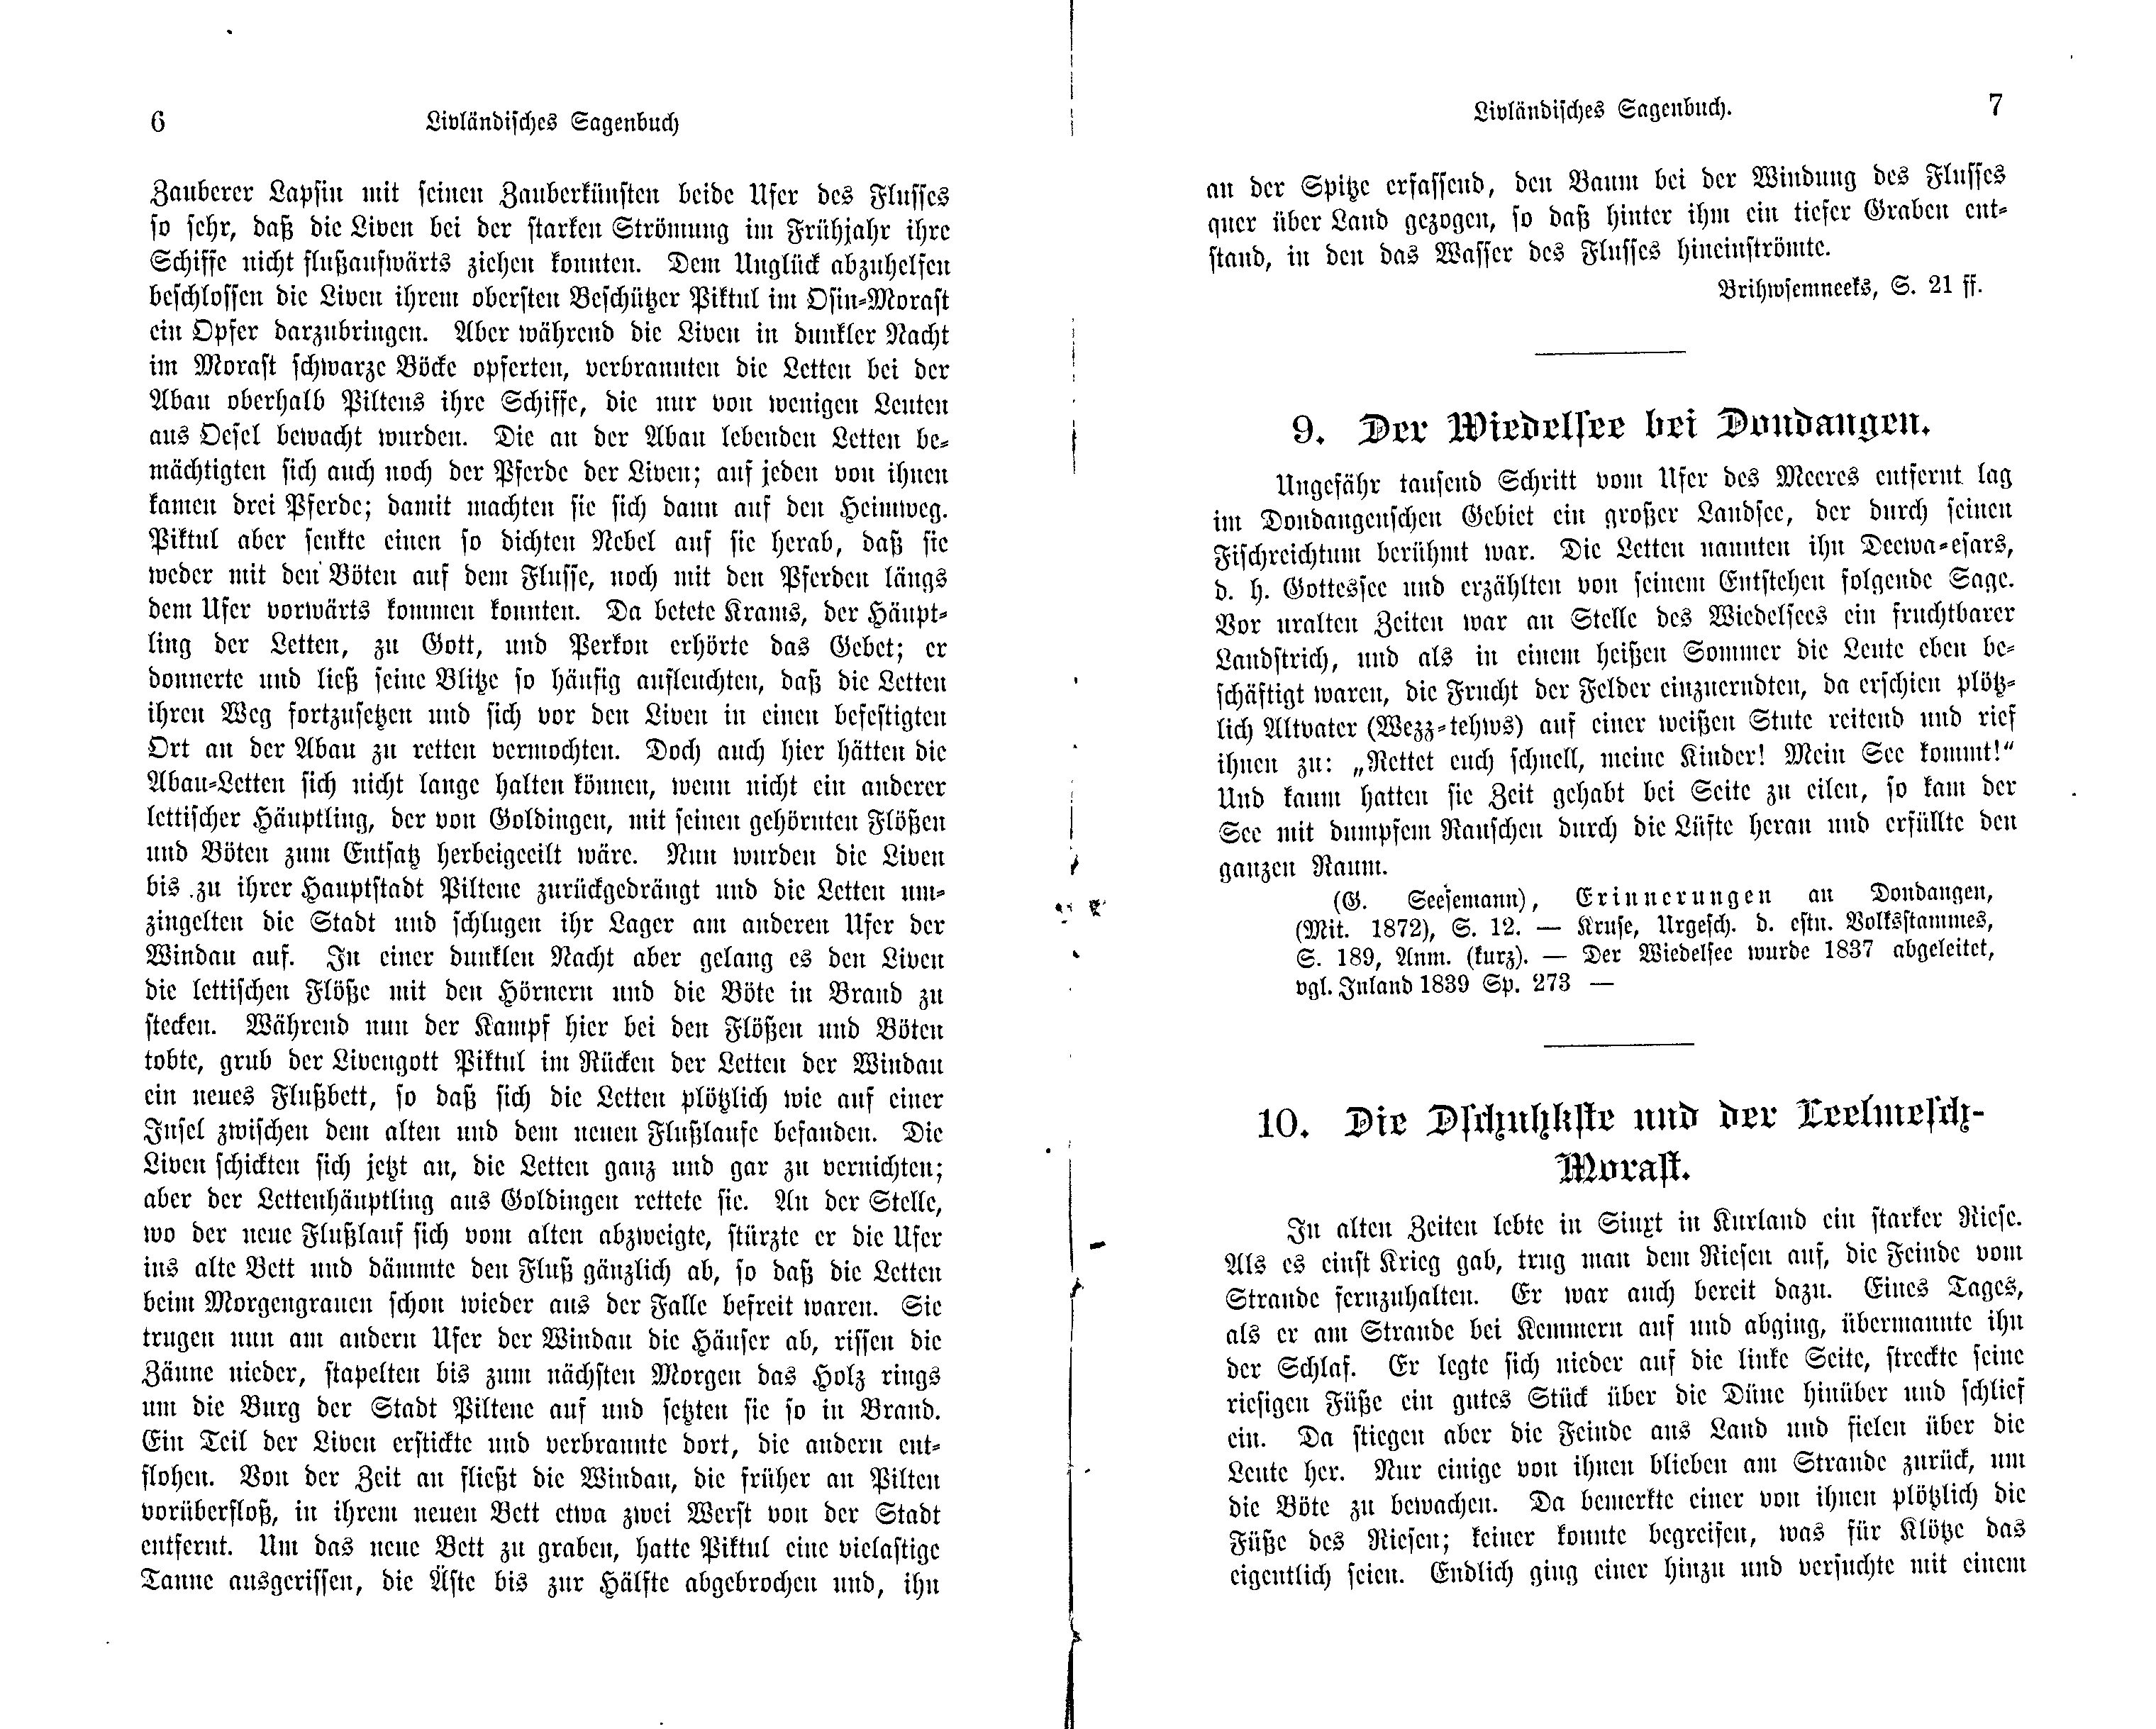 Der Wiedelsee bei Dondangen (1897) | 1. (6-7) Haupttext